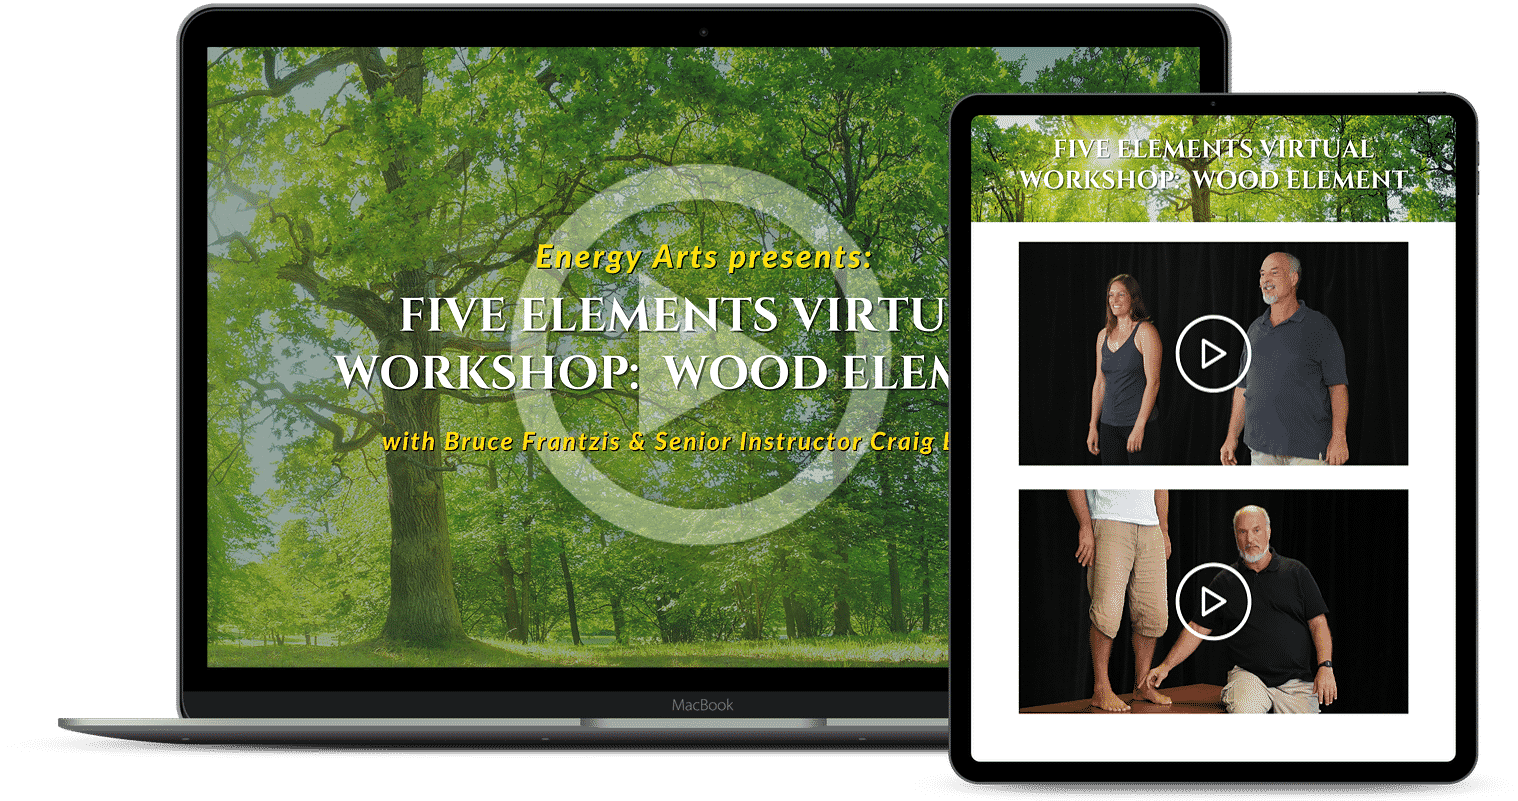 Five Elements Virtual Workshop: Wood Element - Bruce Frantzis